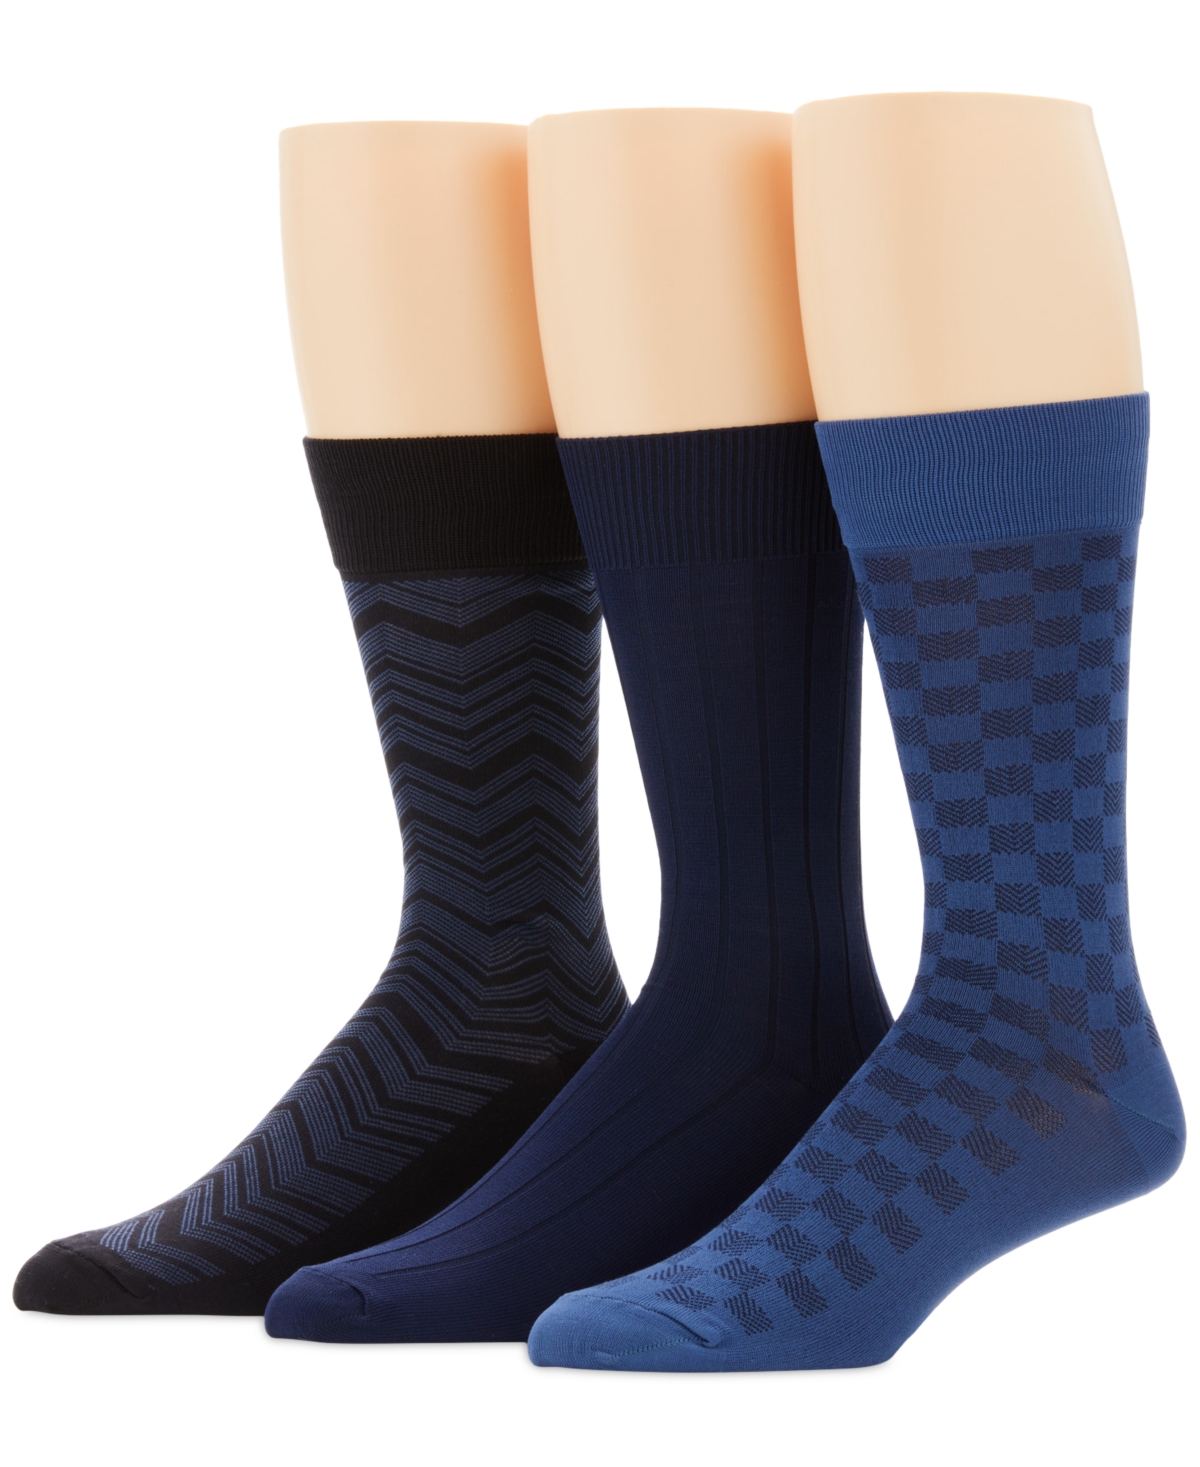 Perry Ellis Men's 3-Pk. Microfiber Patterned Socks - New Navy